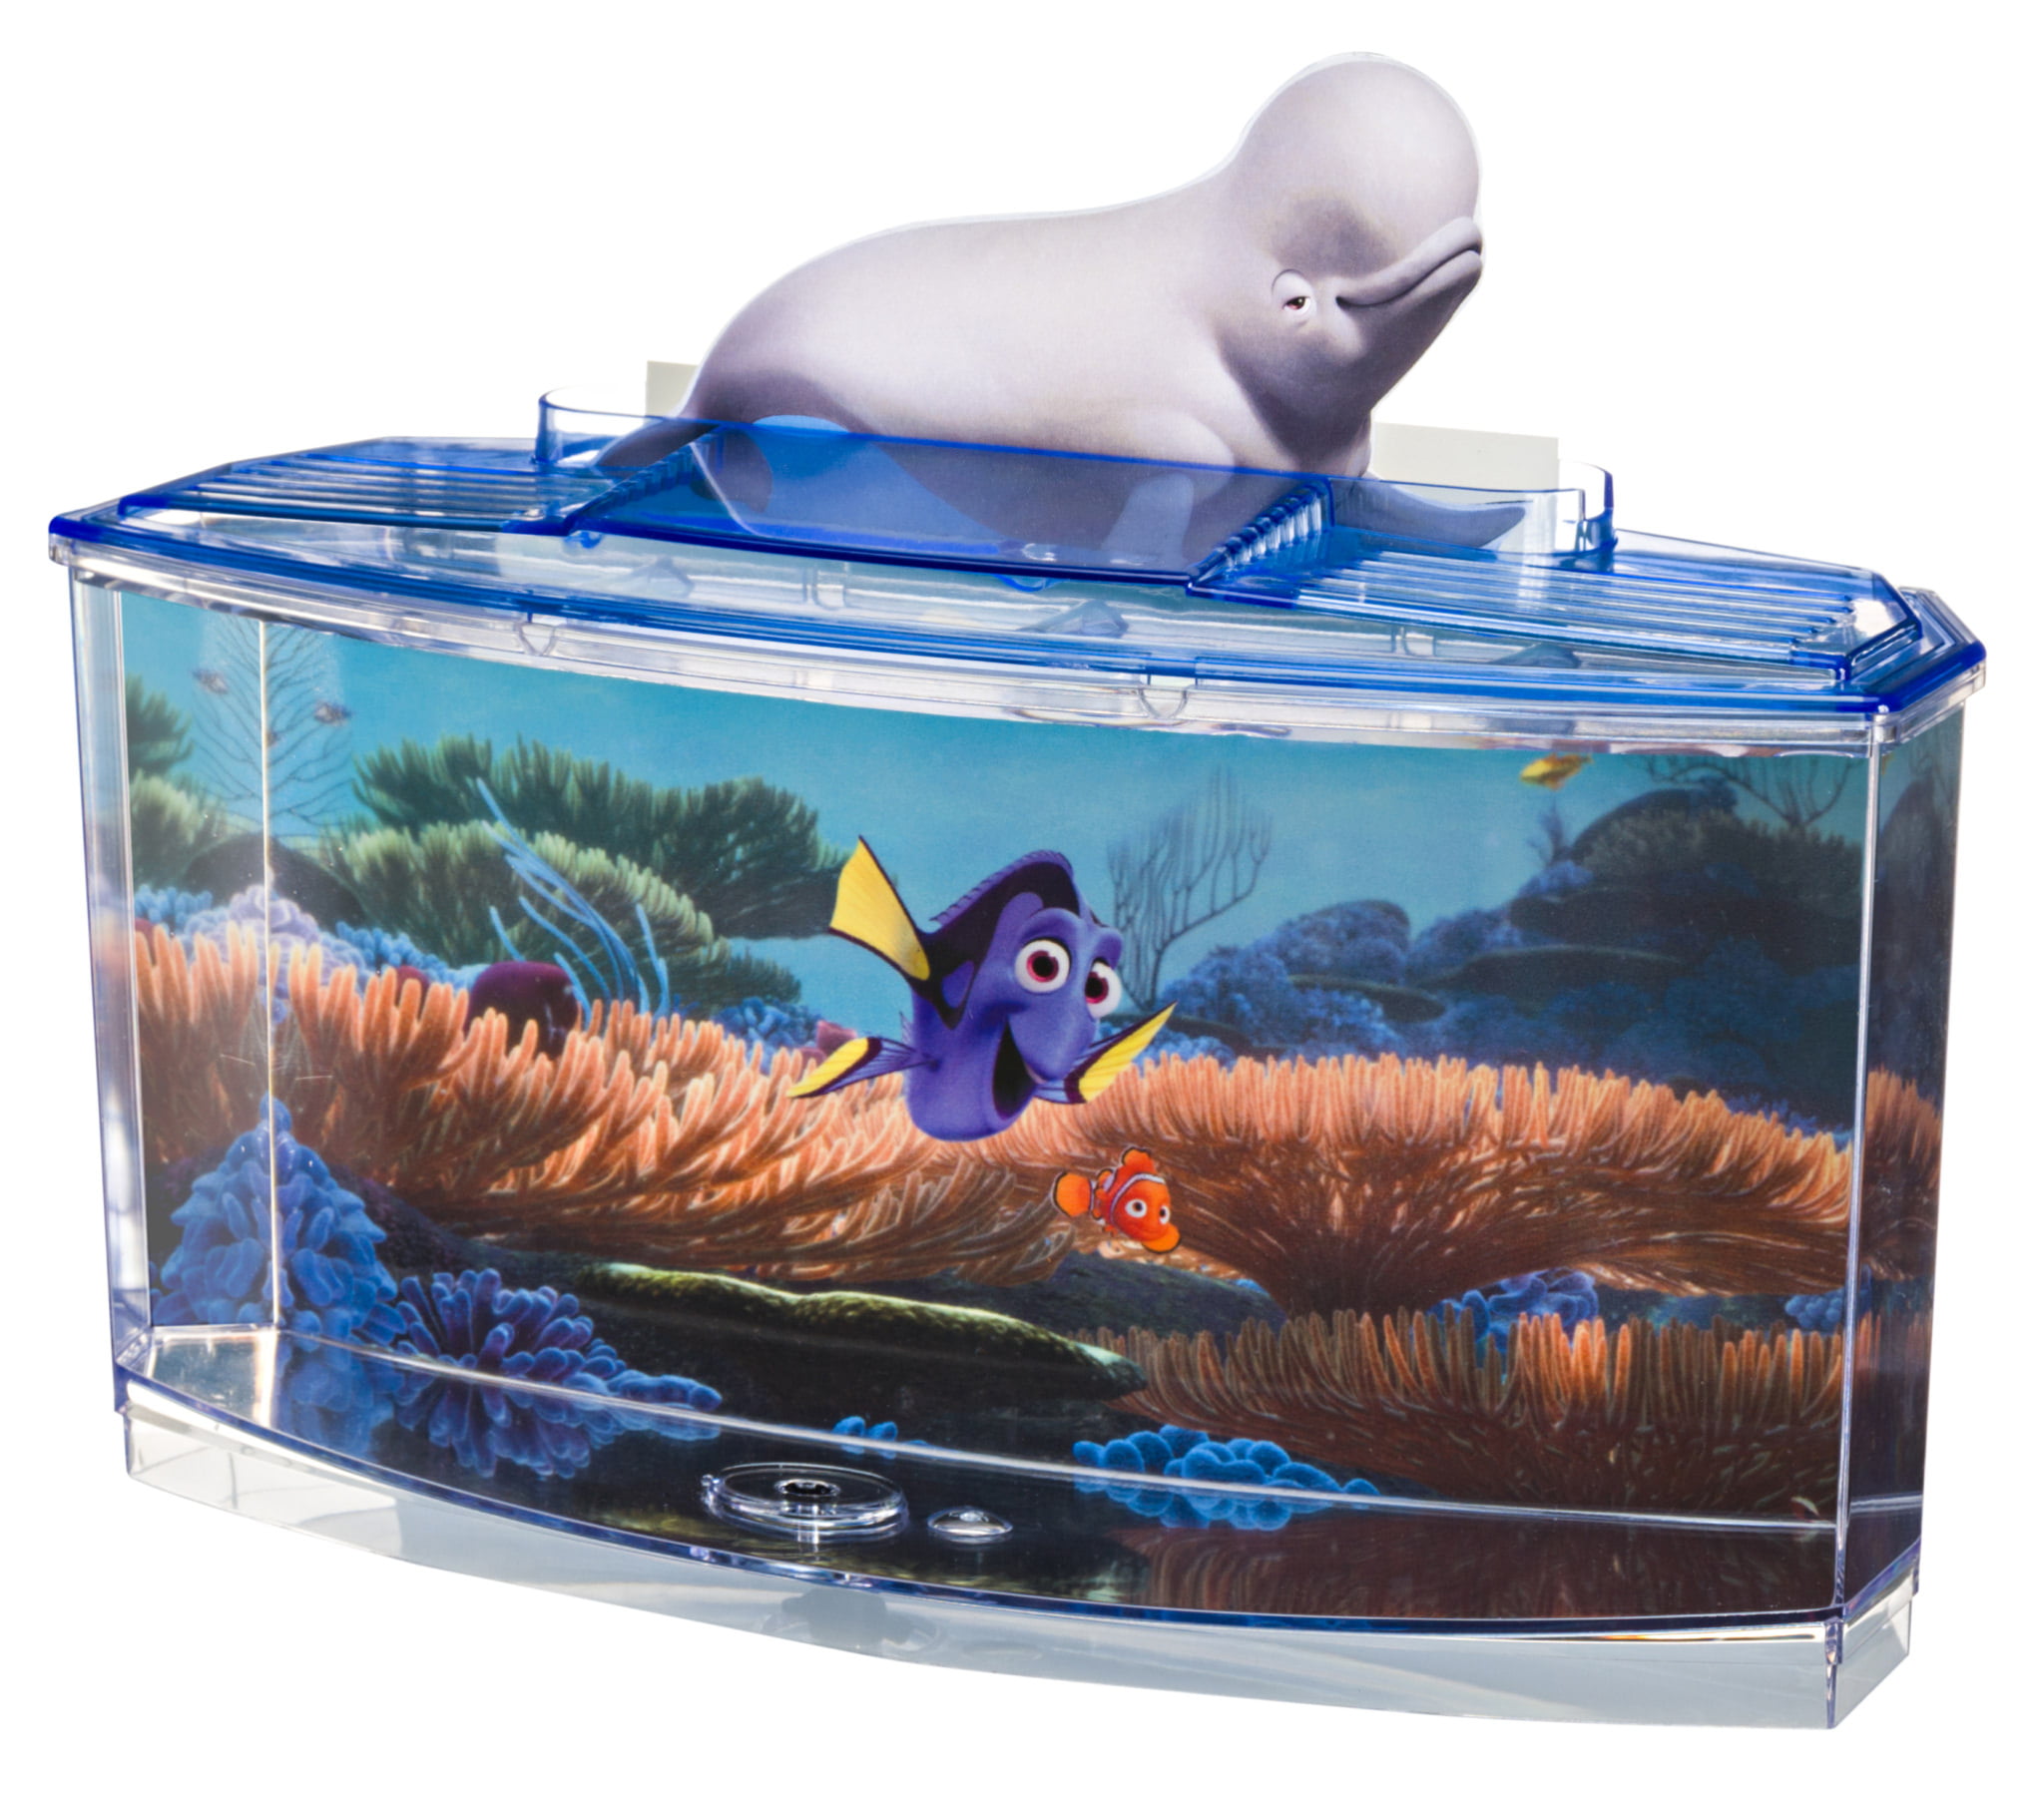 Penn Plax Disney Pixar Finding Dory Betta Fish Tank Kit